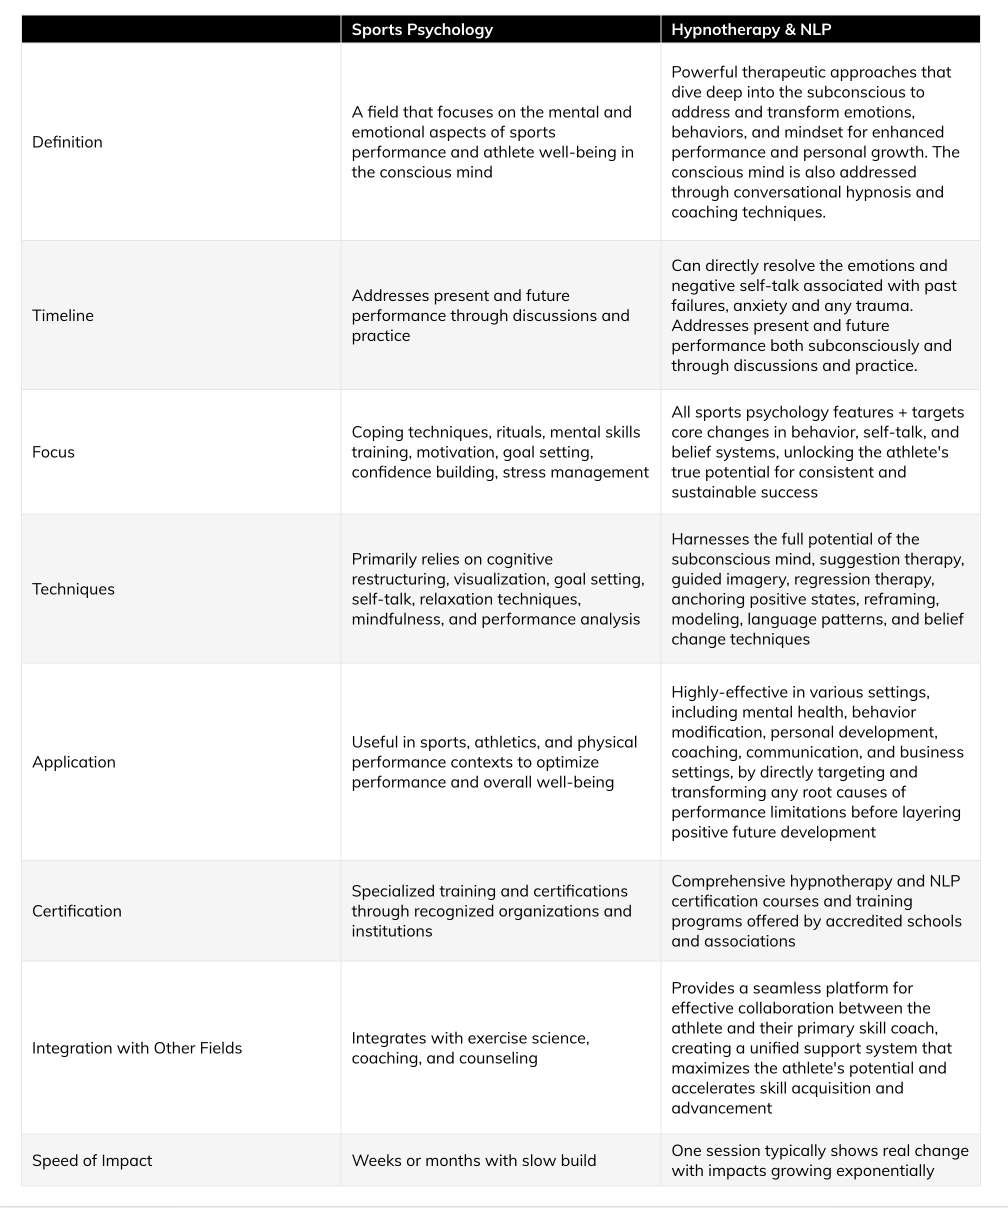 Sports Psychology vs Hypnotherapy NLP table